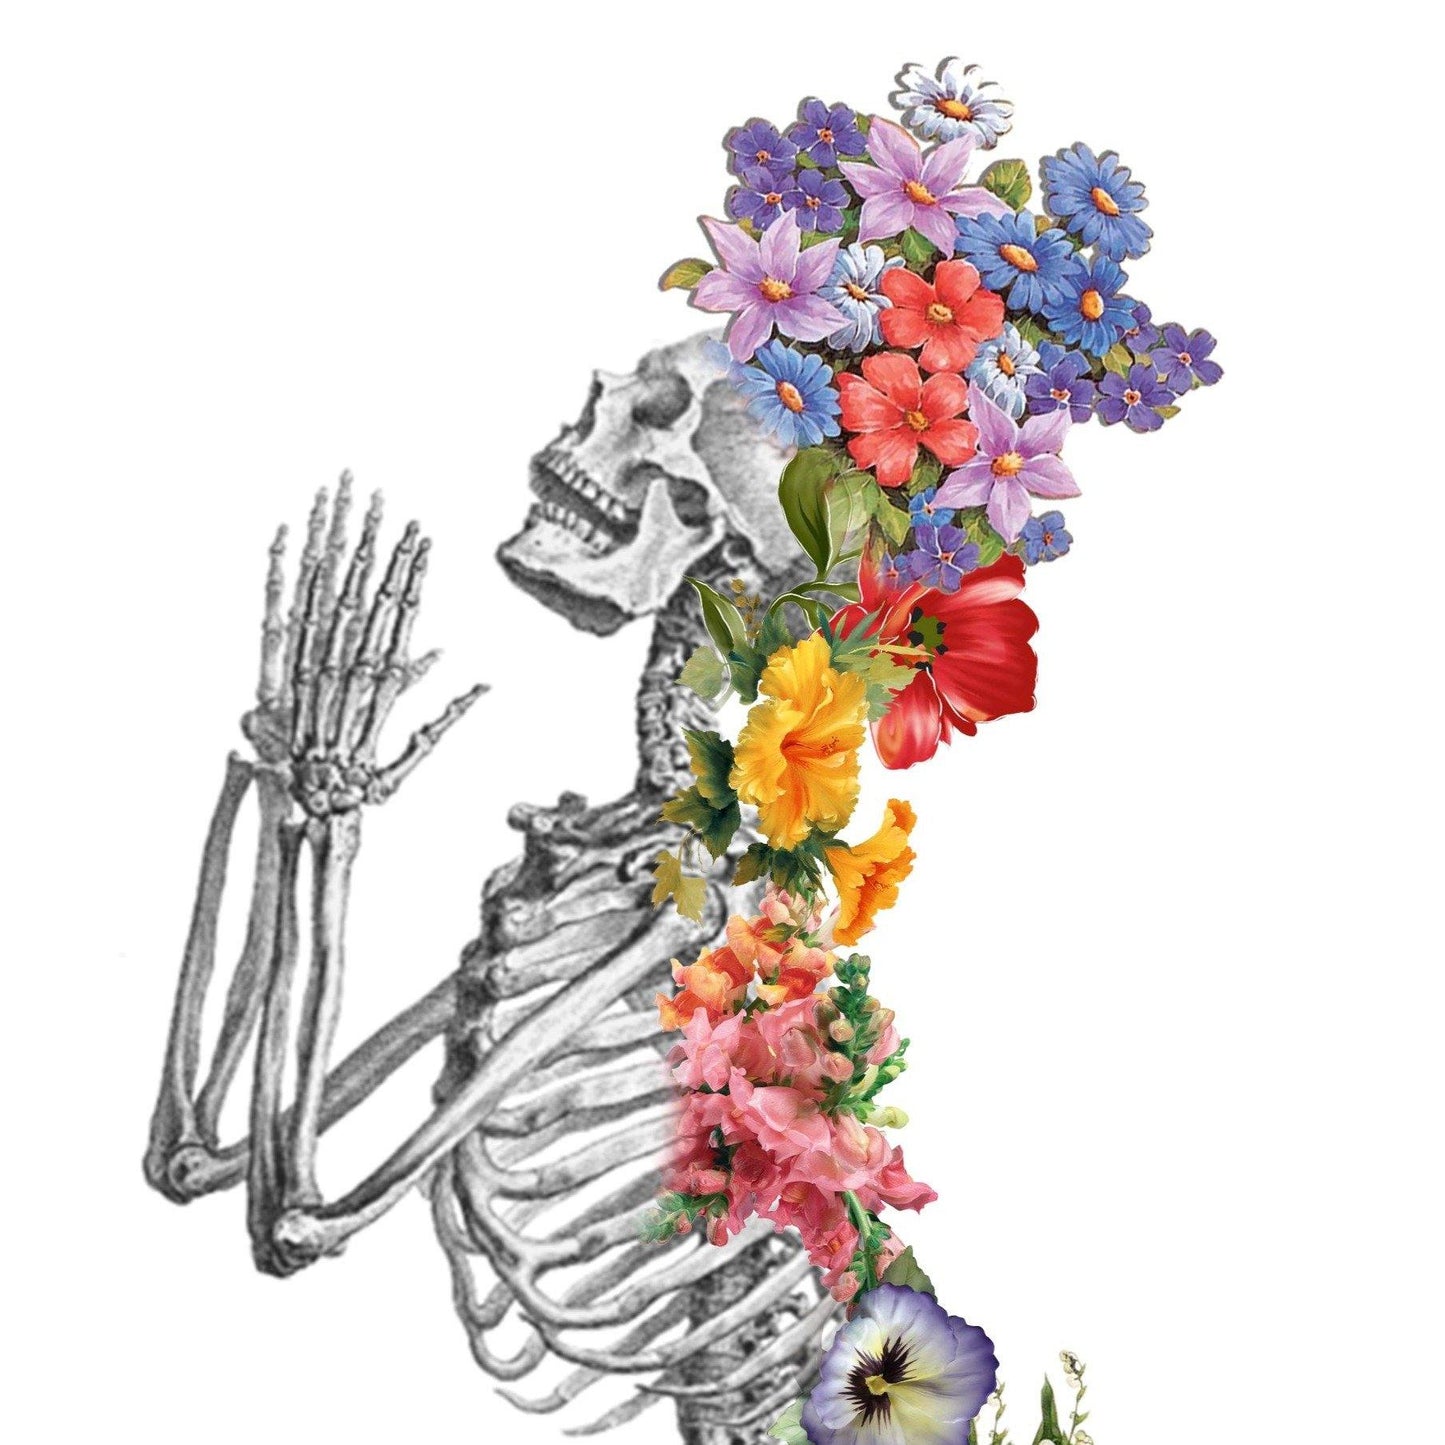 Full Skeleton Anatomical Flowers | Anatomical Body Print | Flower Art Print | Illustration Poster - 98types